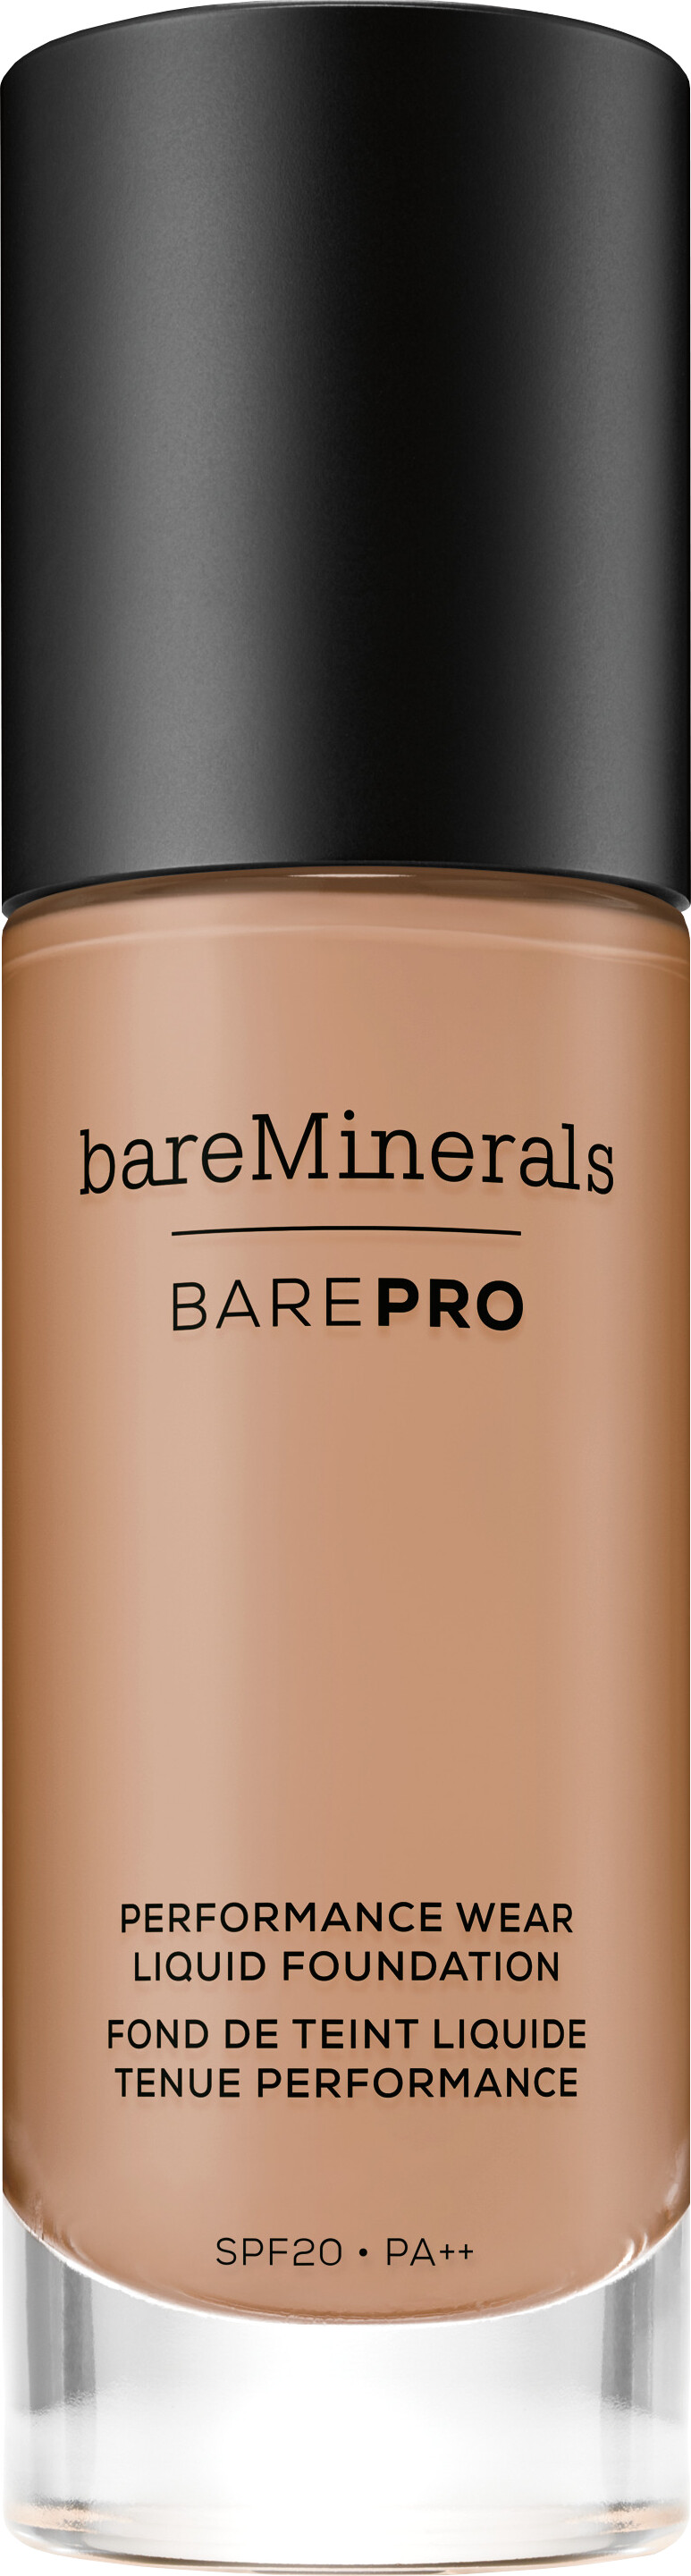 bareMinerals BAREPRO Performance Wear Liquid Foundation SPF20 30ml 17 - Fawn